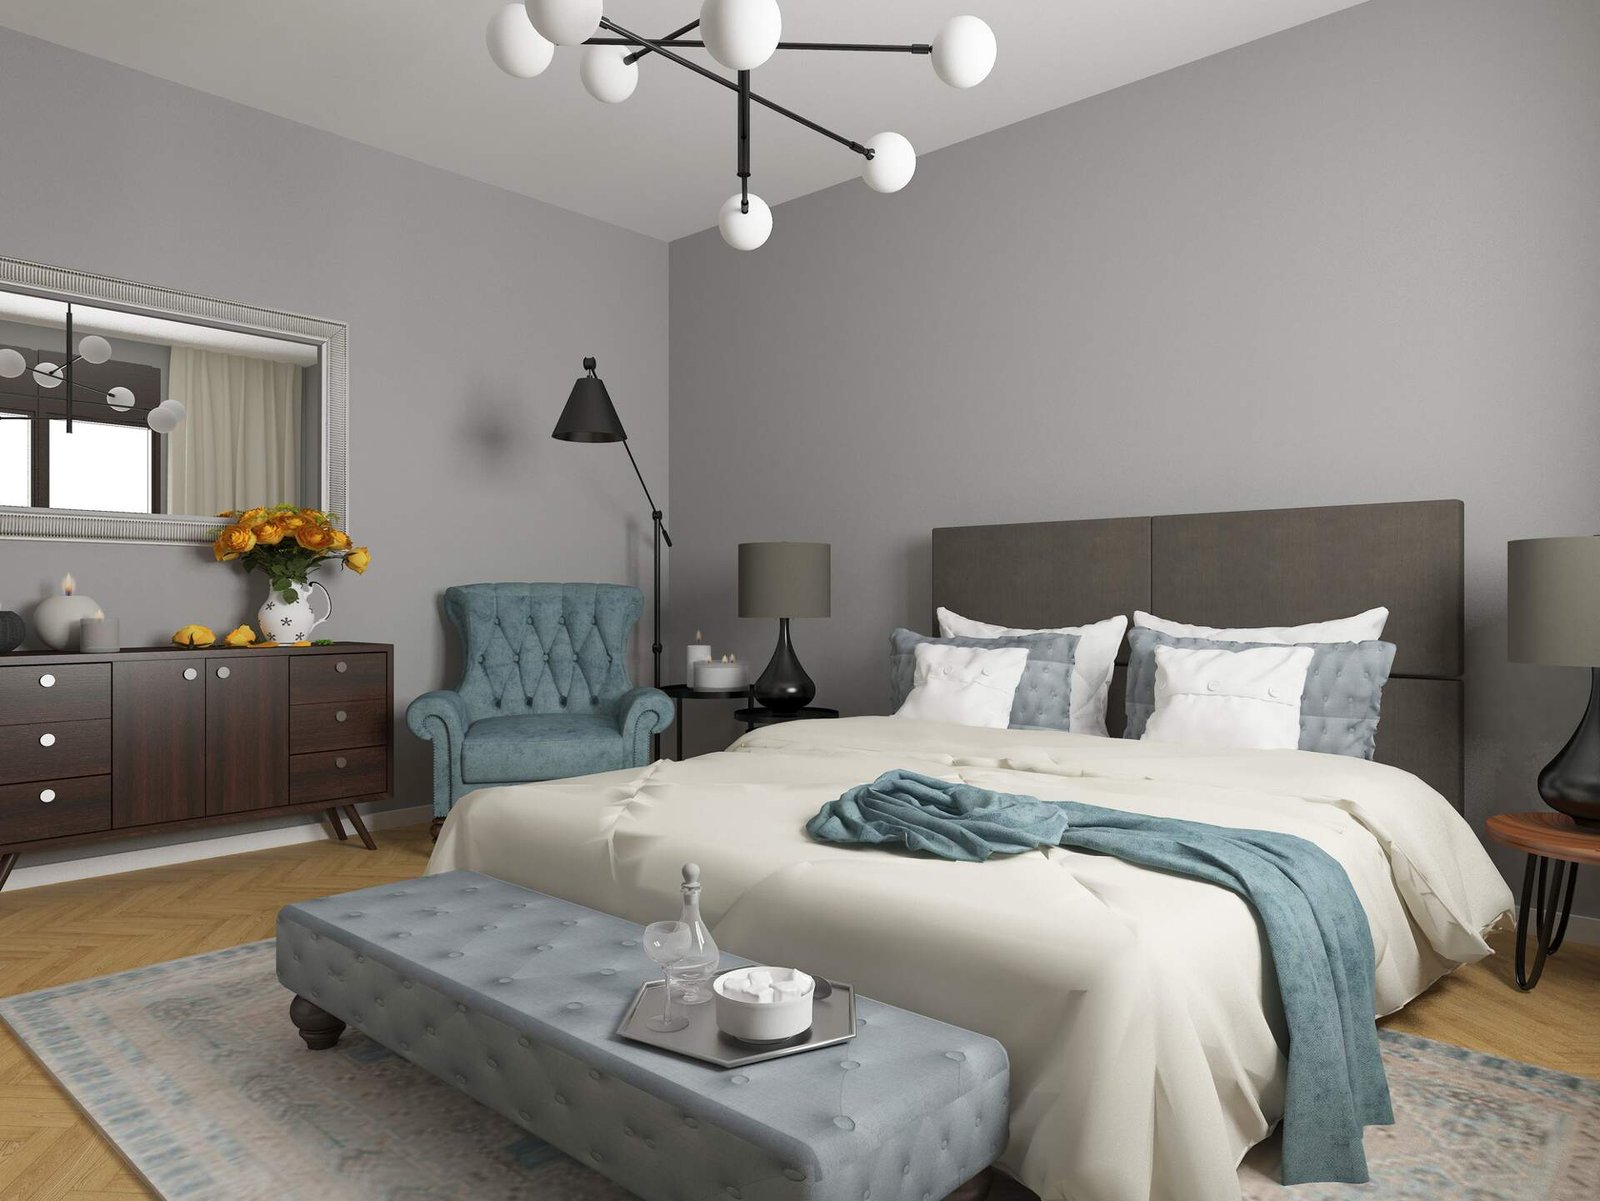 Sleep Decor – 7 Bedroom Design Tips That Will Improve Your Sleep